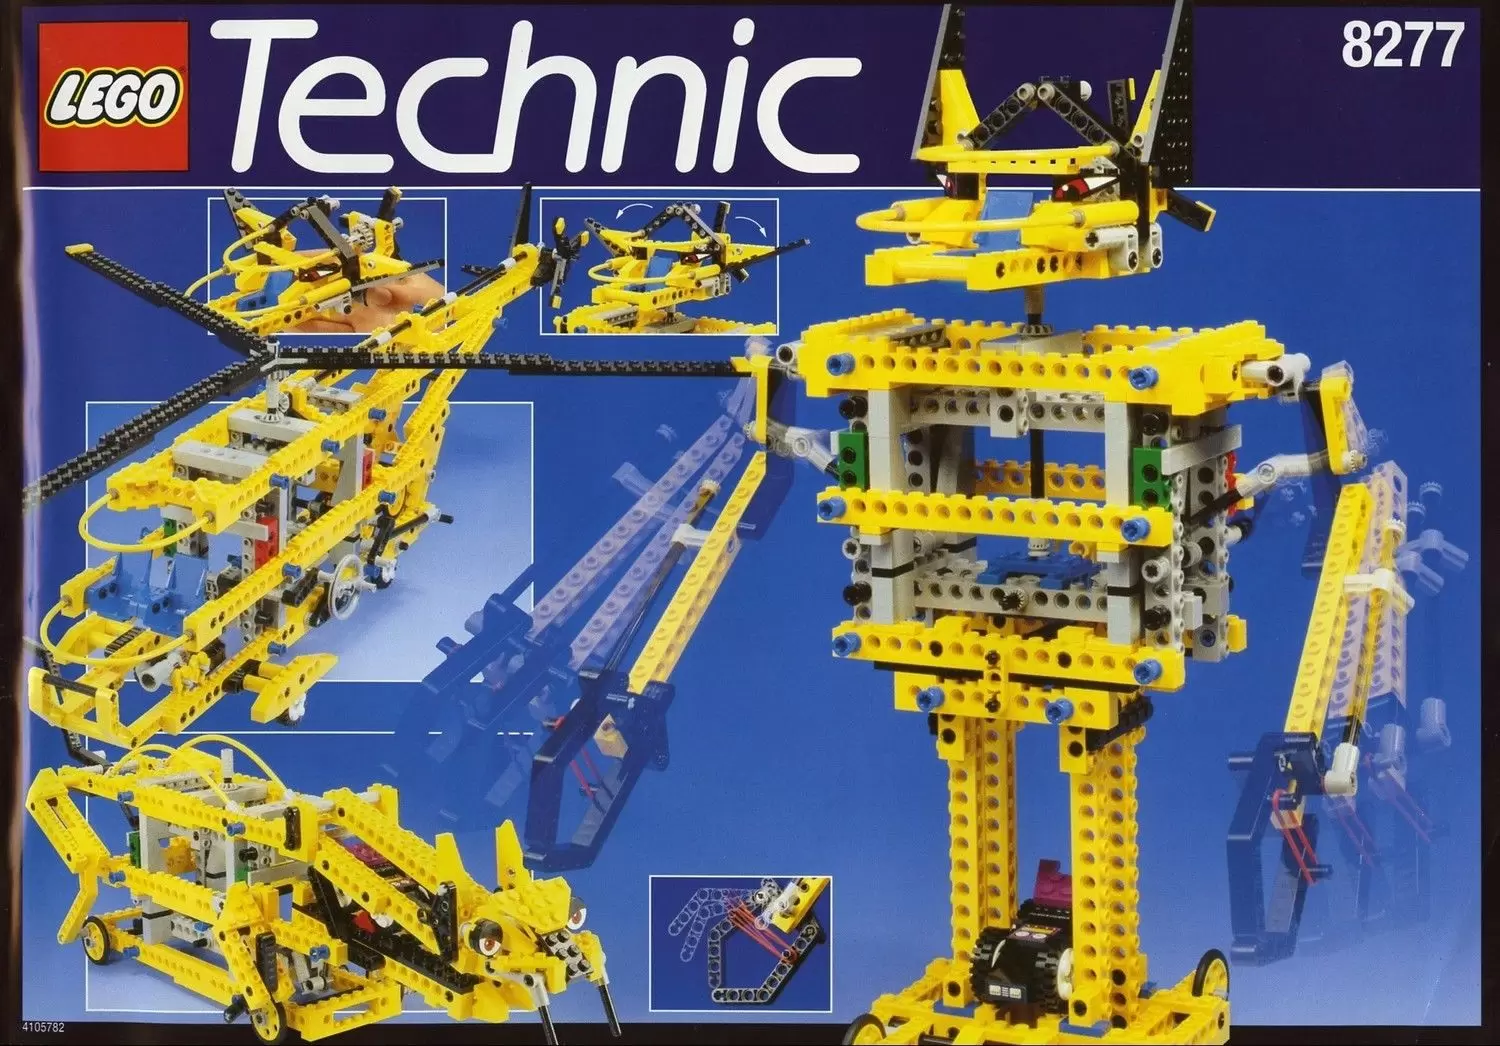 LEGO Technic - Giant Model Set